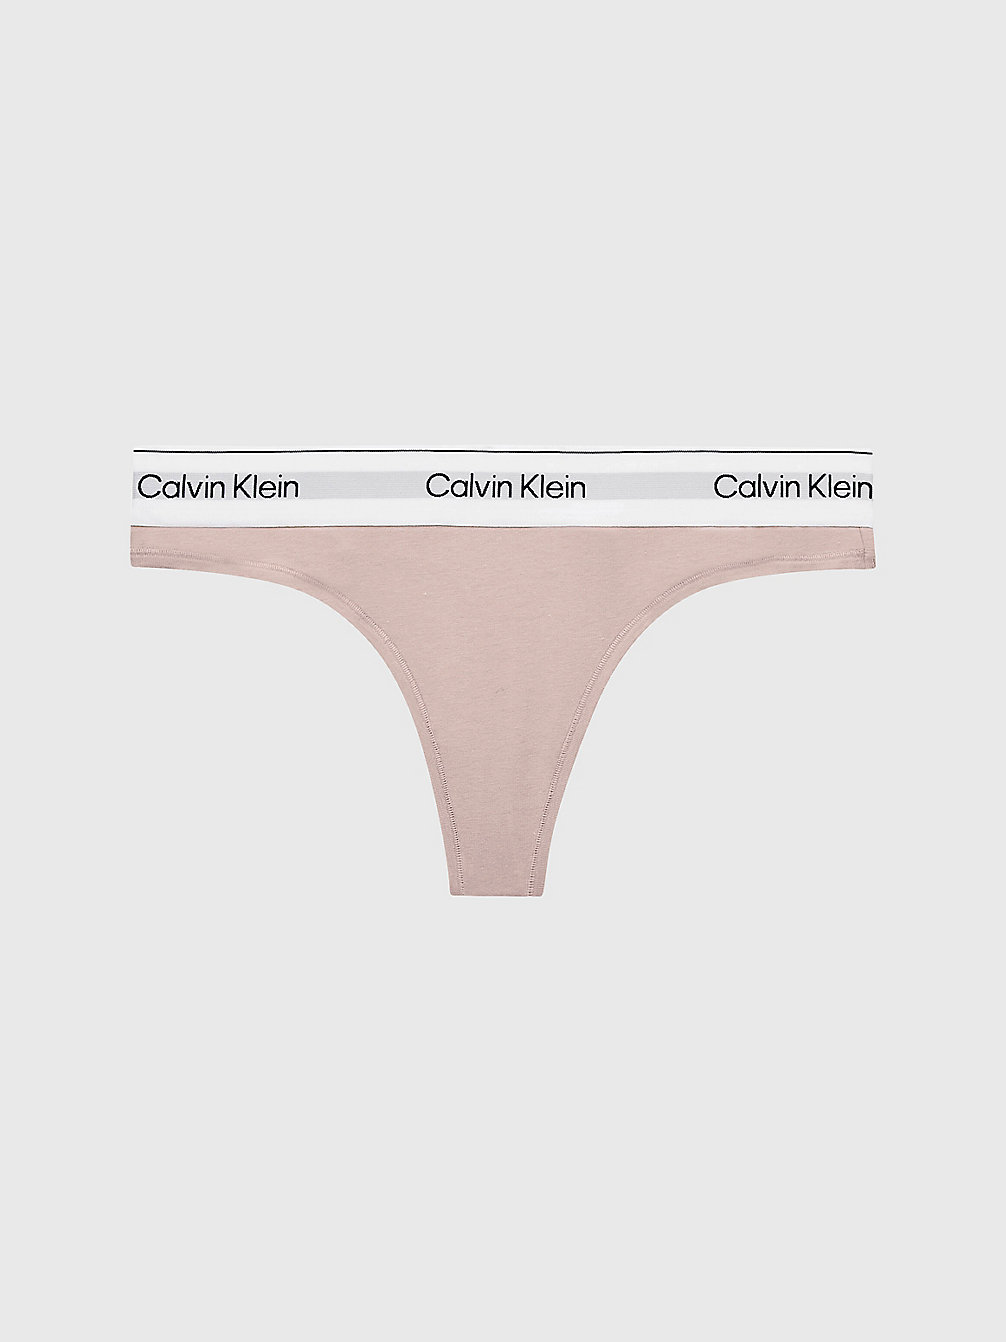 Perizoma - Modern Cotton > CEDAR > undefined donna > Calvin Klein